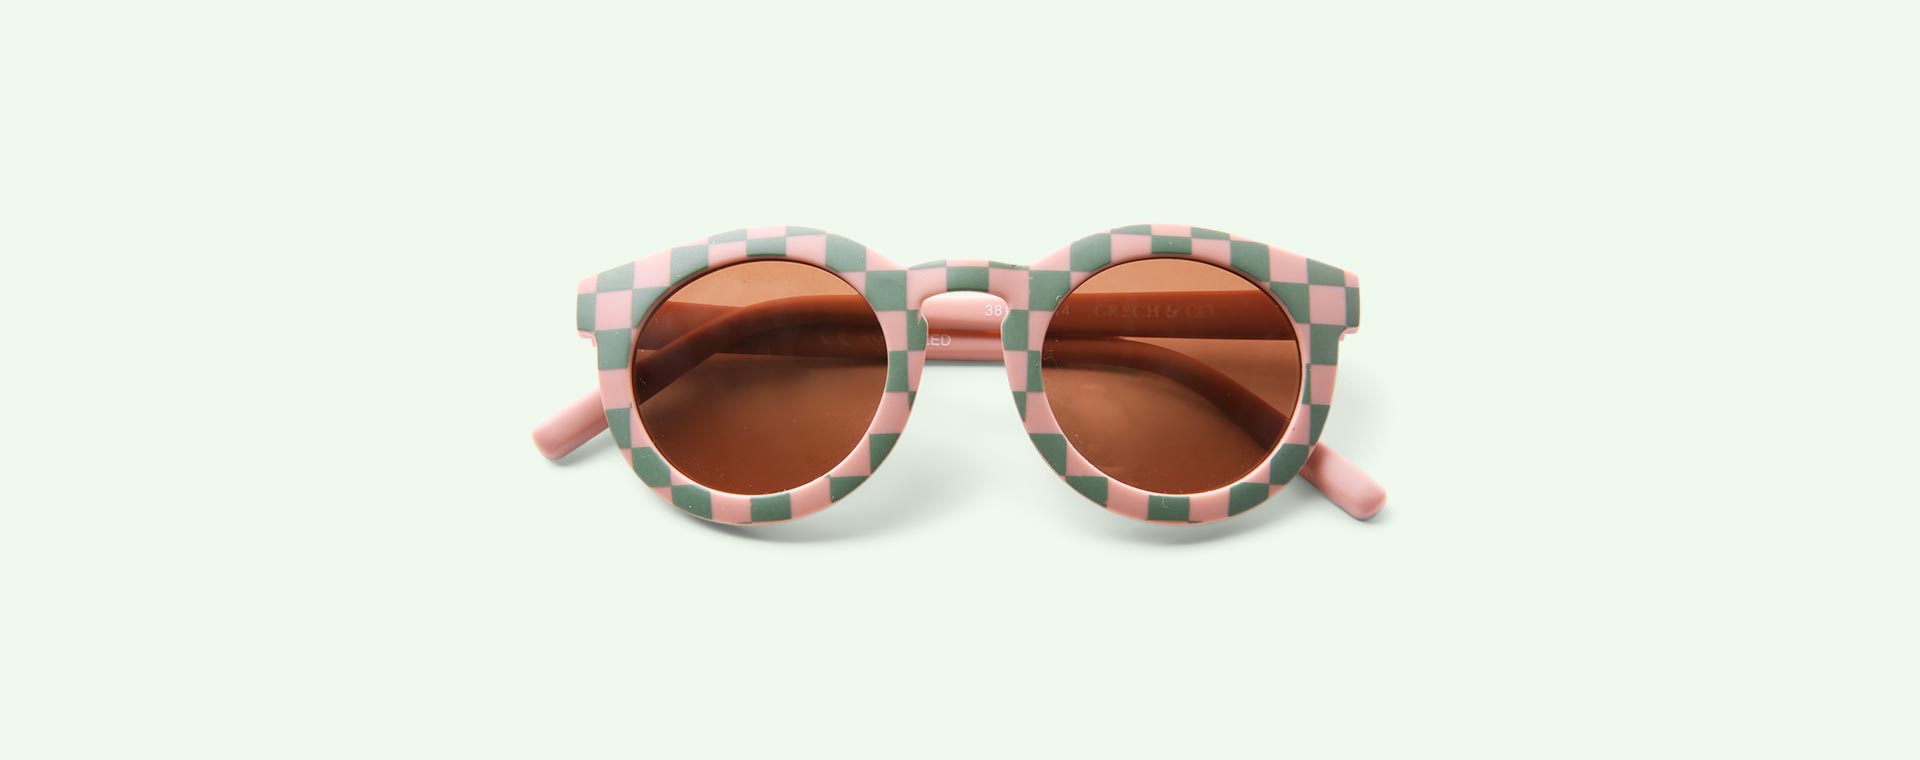 Checks Sunset  + Orchard Grech & Co Polarised Sunglasses